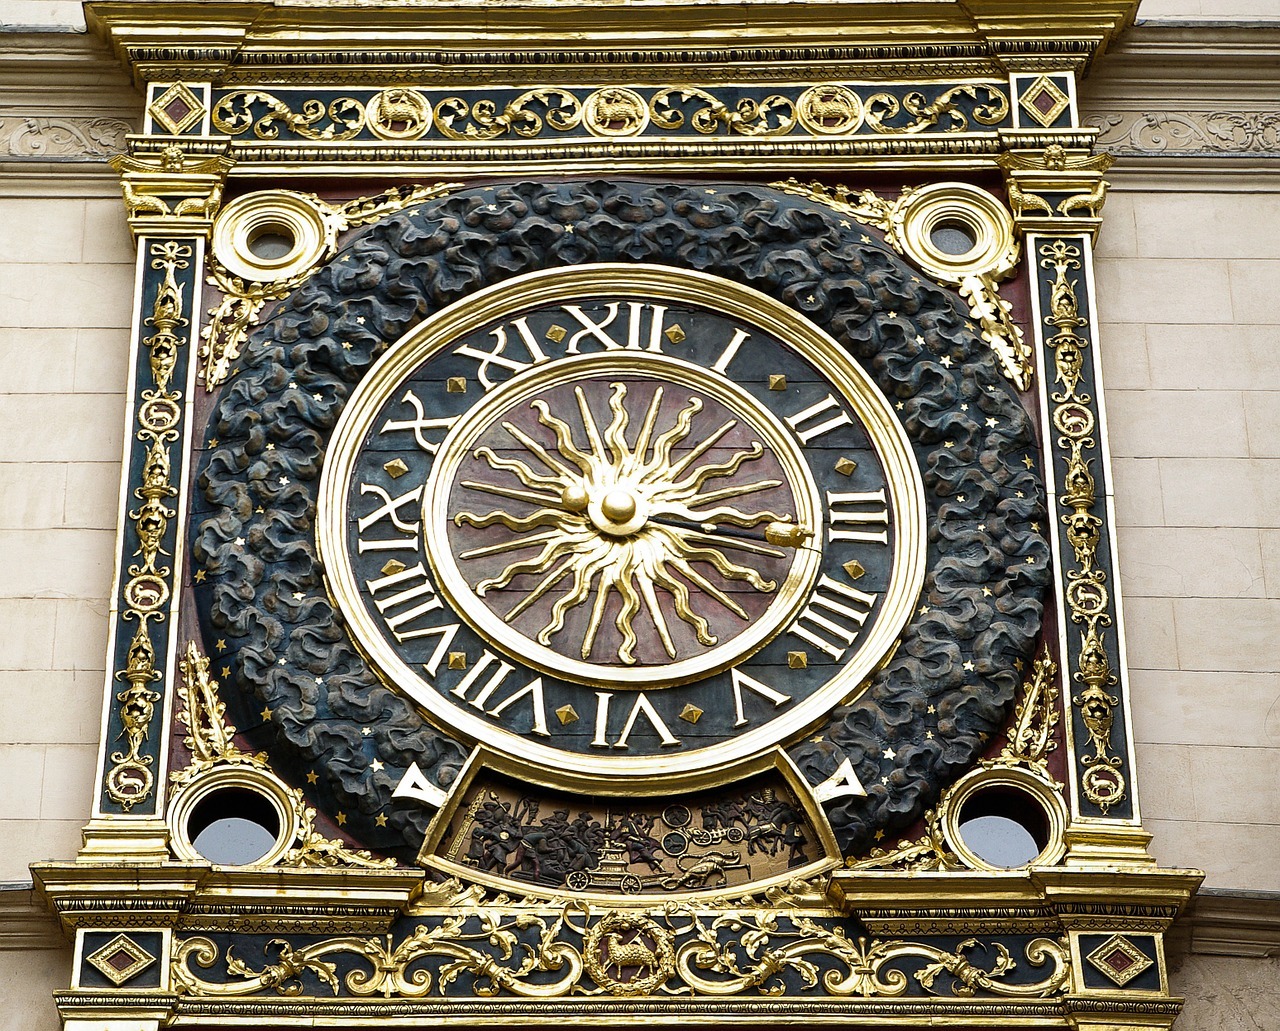 The Gros-Horloge